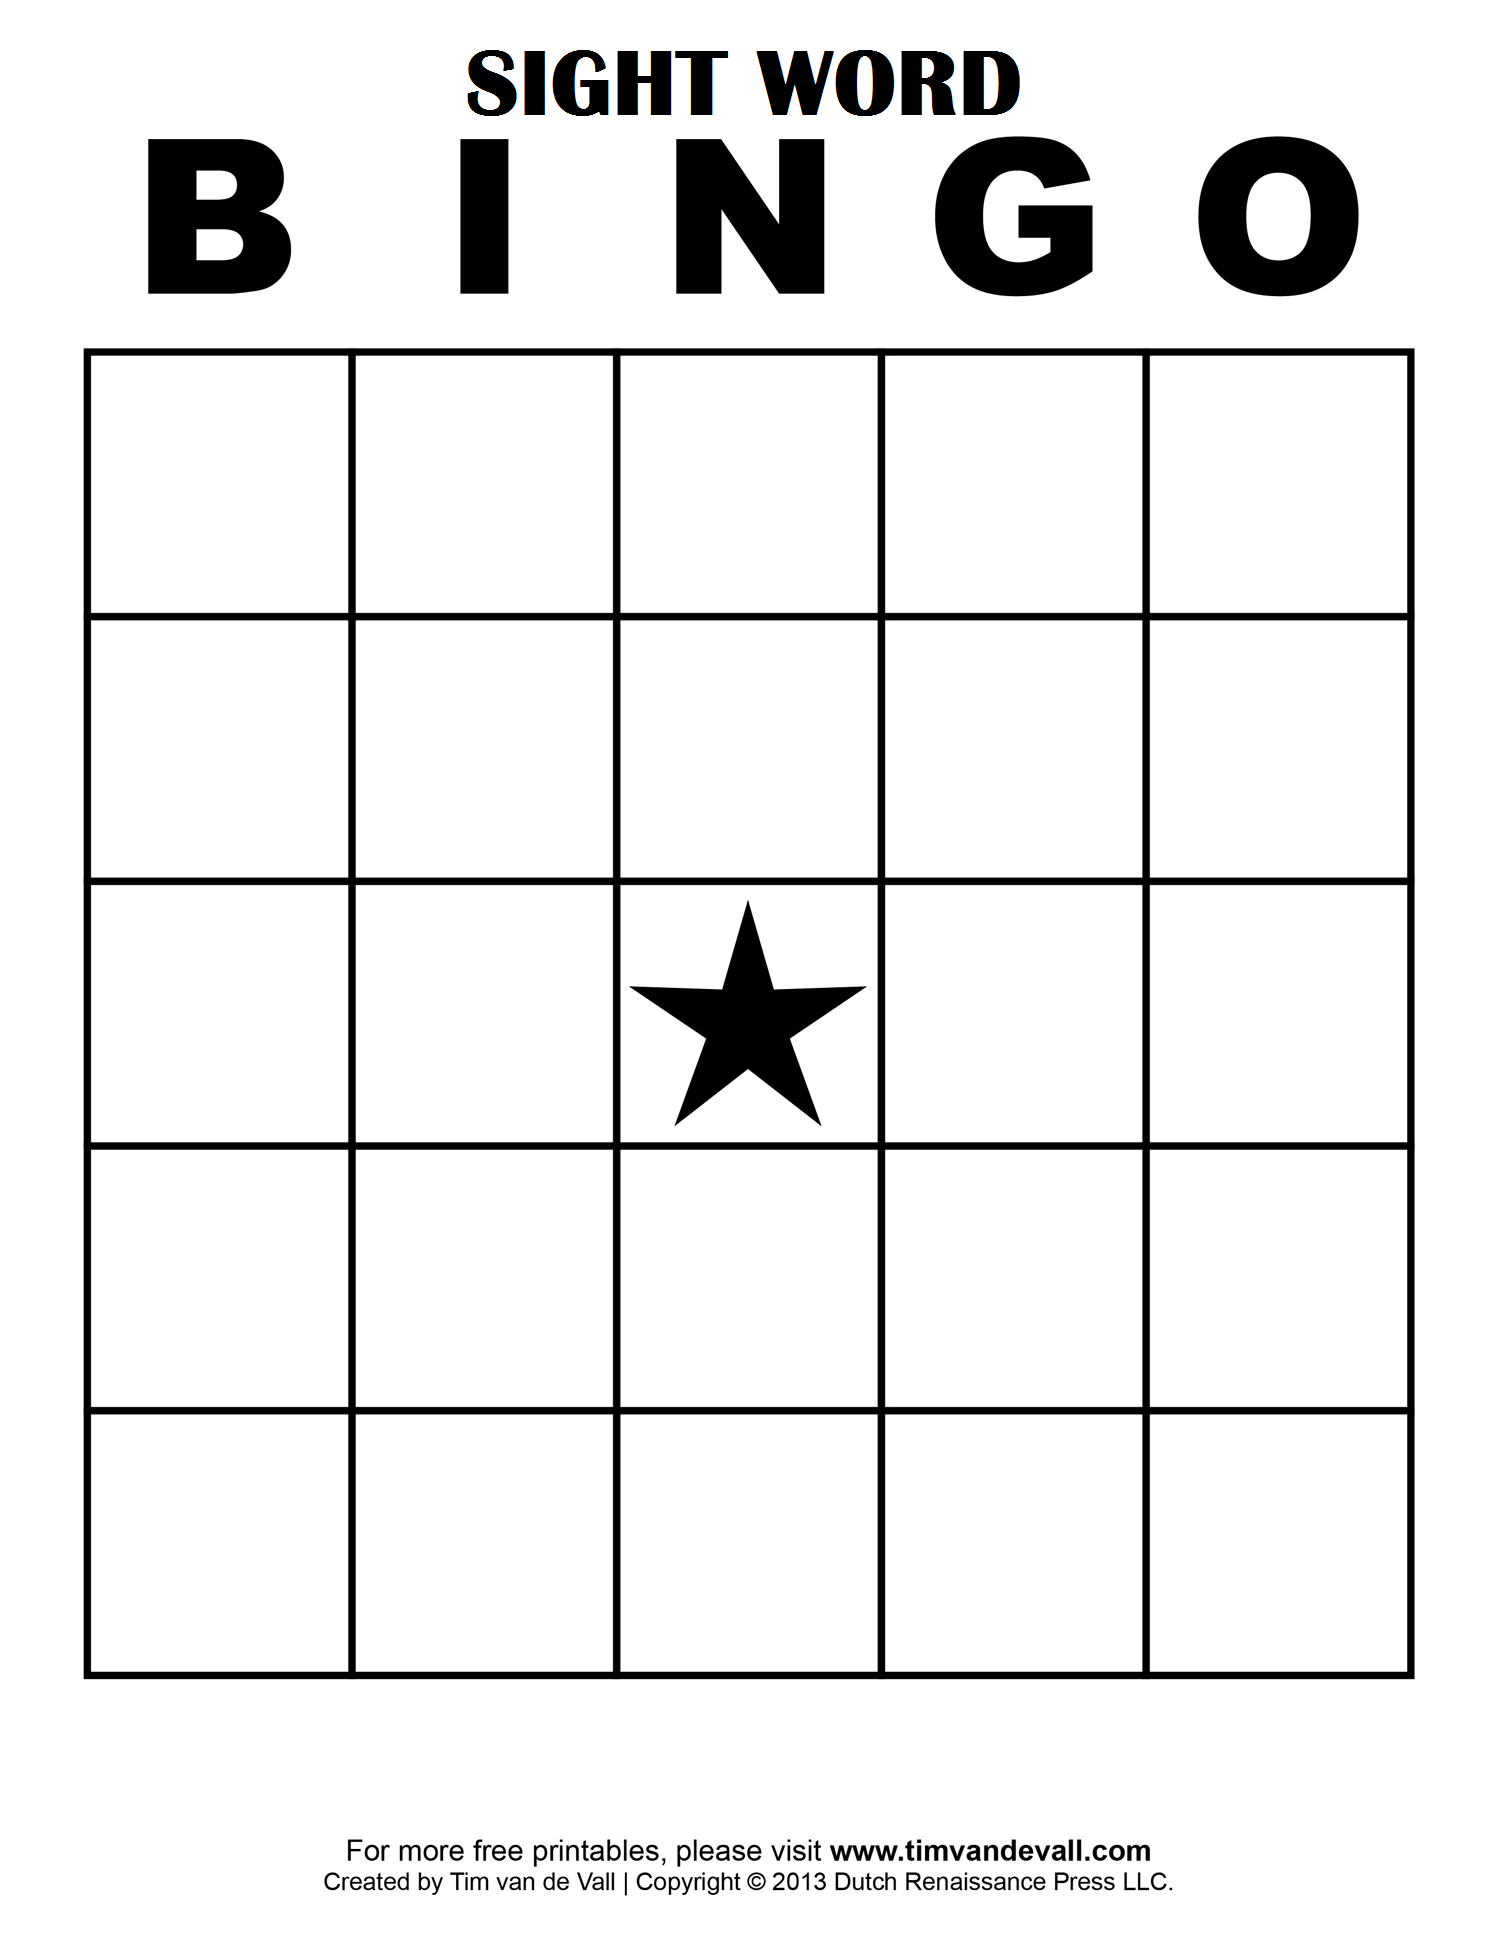 bingo-card-generator-free-printable-customize-and-print